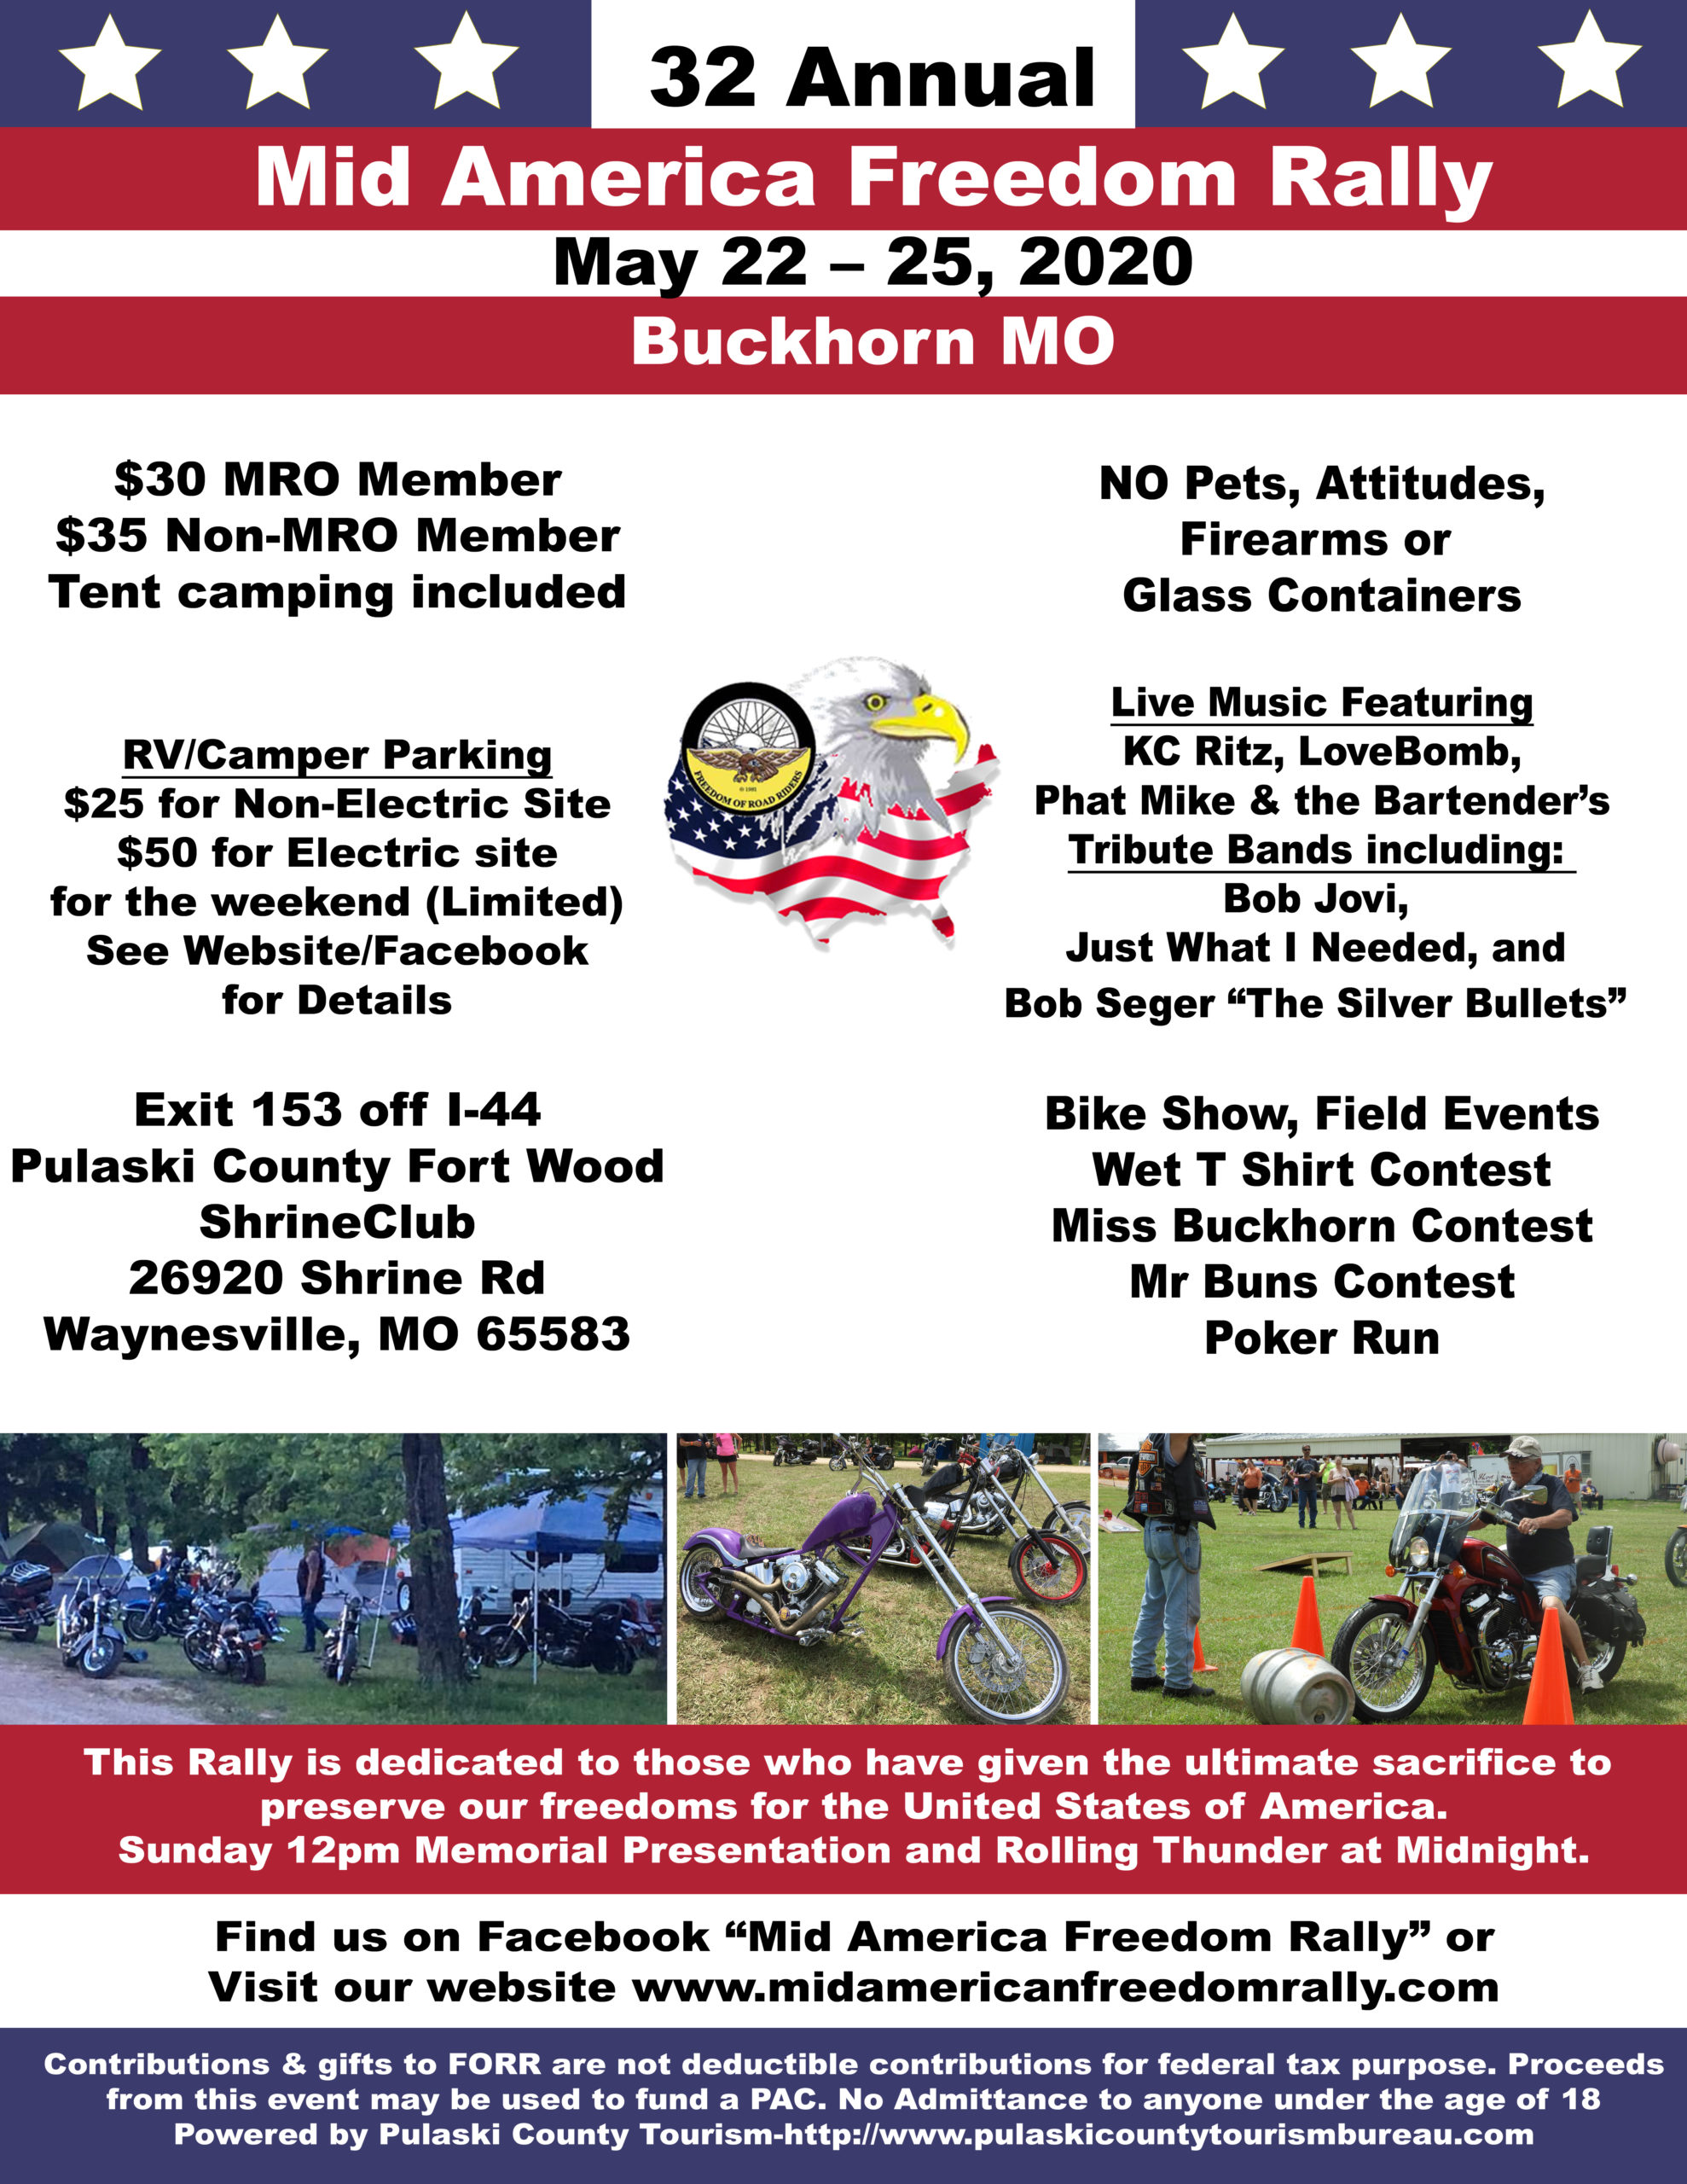 Mid America Freedom Rally 2020 Waynesville, Missouri Motorcycle Event